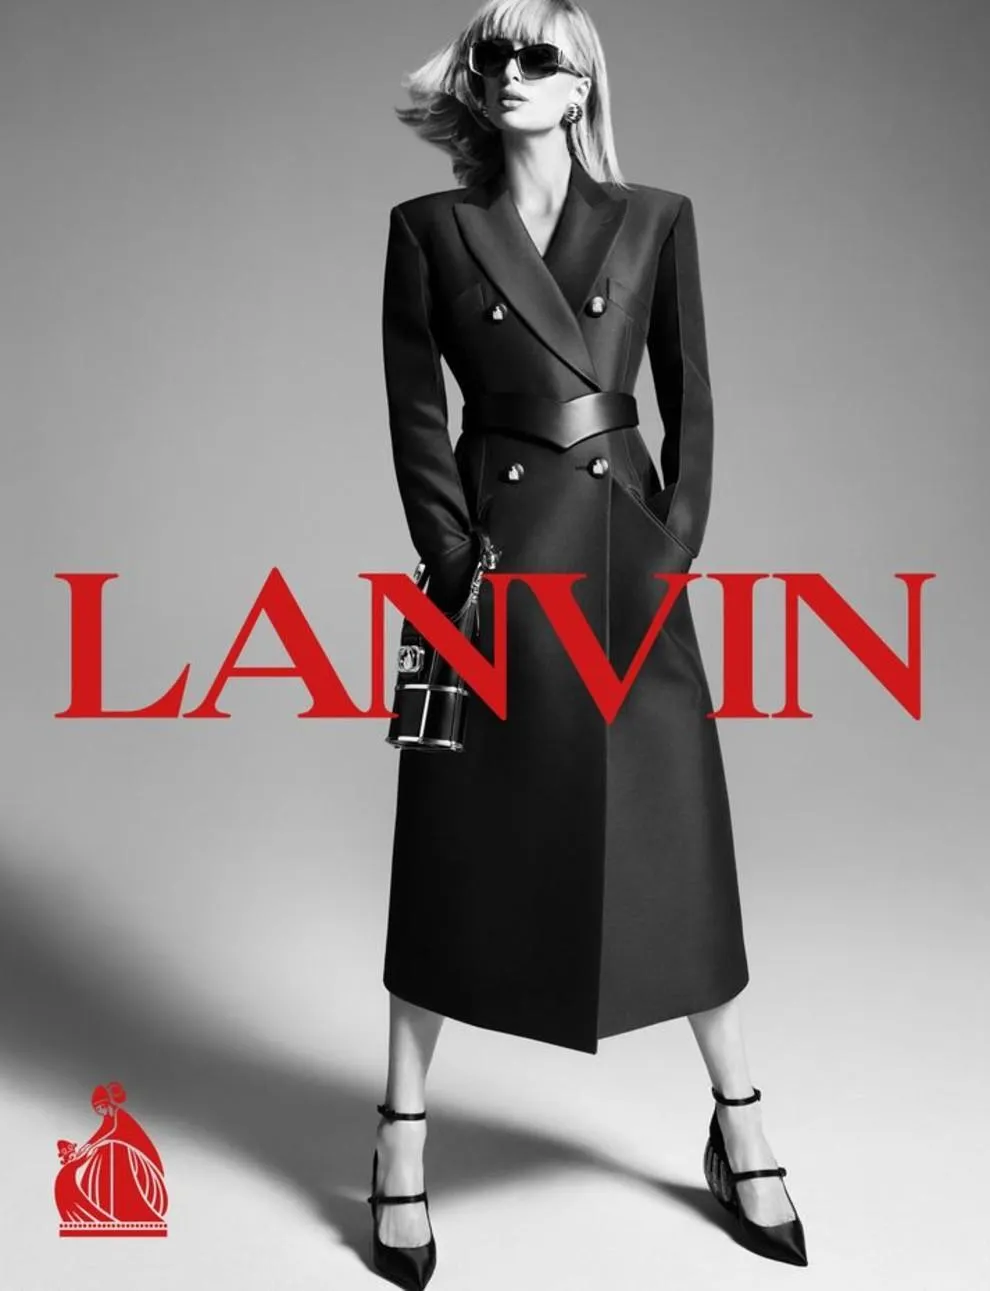 Періс Гілтон знялася у рекламі Lanvin / Vogue